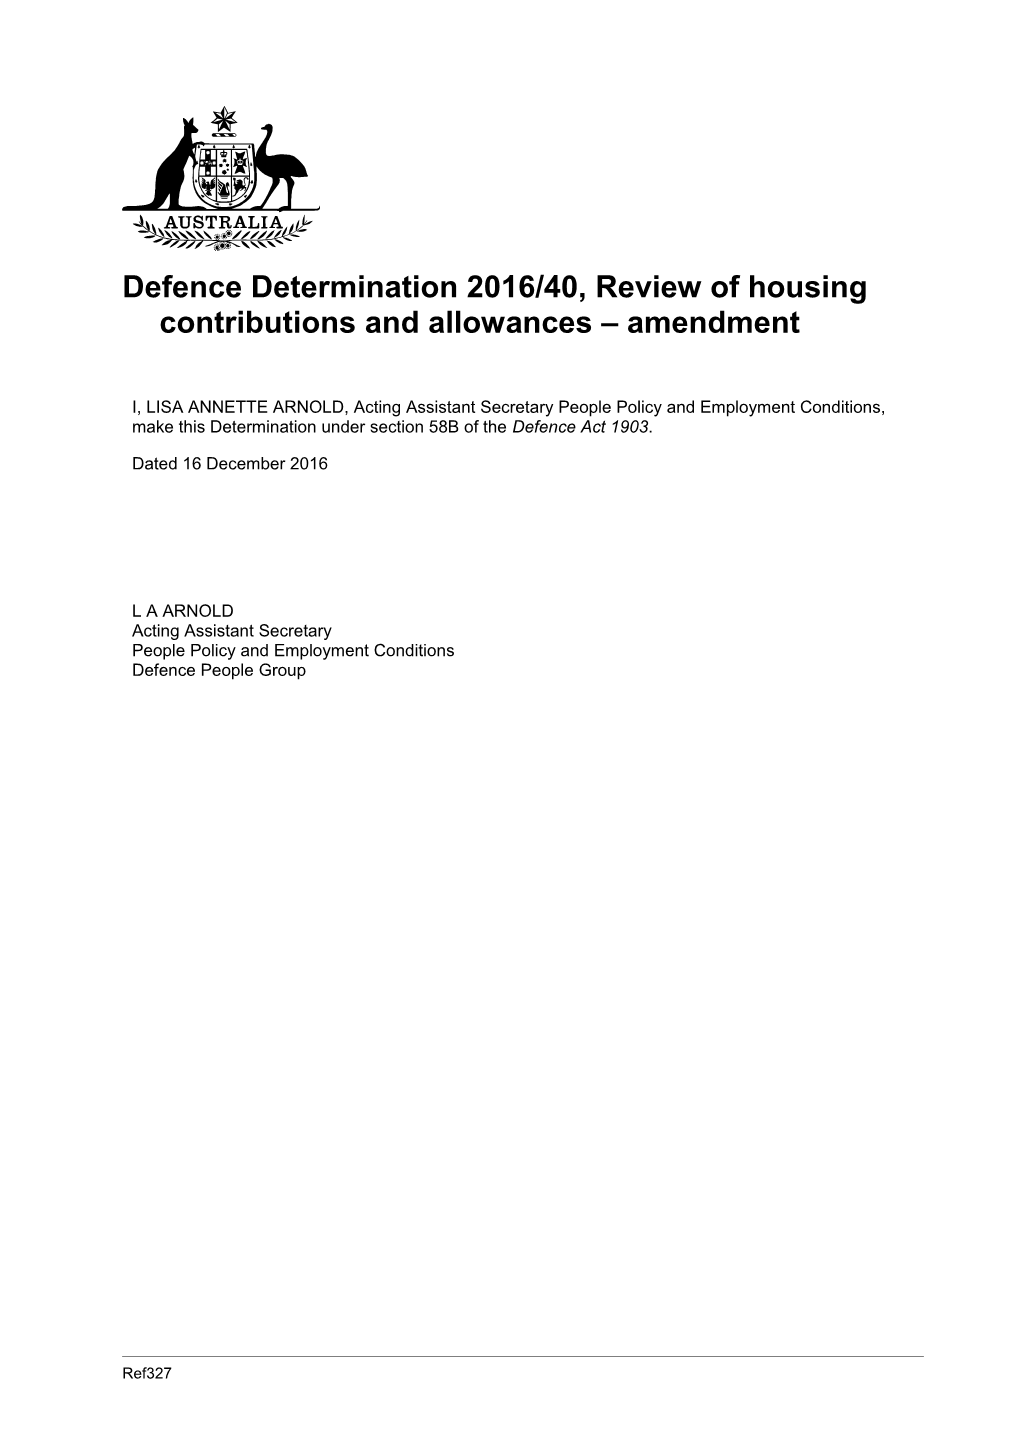 Defence Determination 2016/40, Review of Housing Contributions and Allowances Amendment